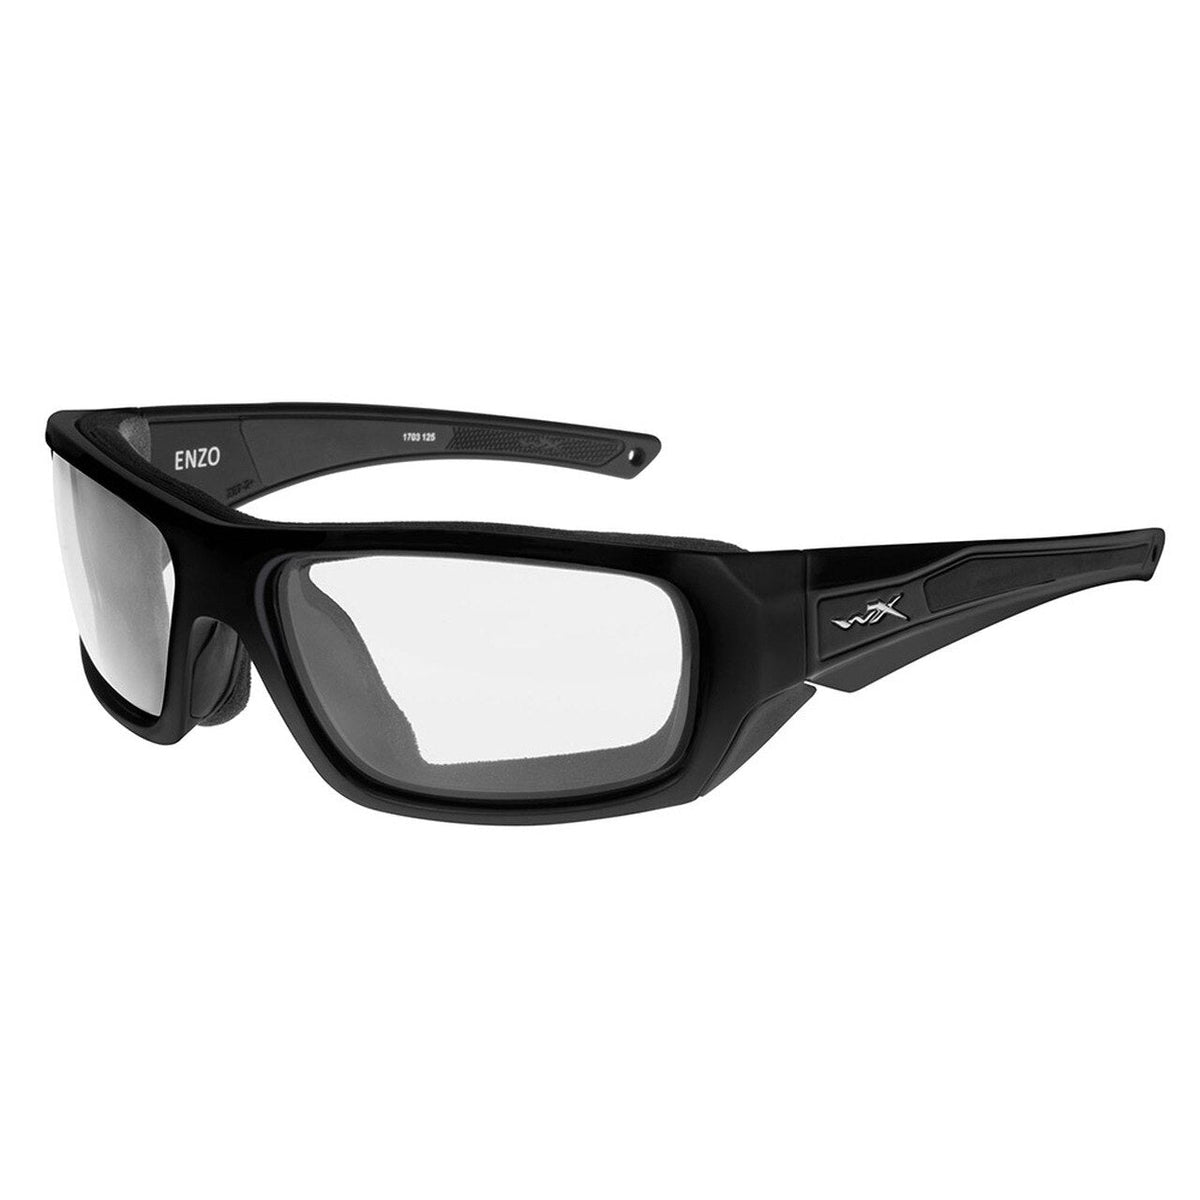 Wiley X Enzo Sunglasses Clear Lens Matte Black Frame Eyewear Wiley X Tactical Gear Supplier Tactical Distributors Australia